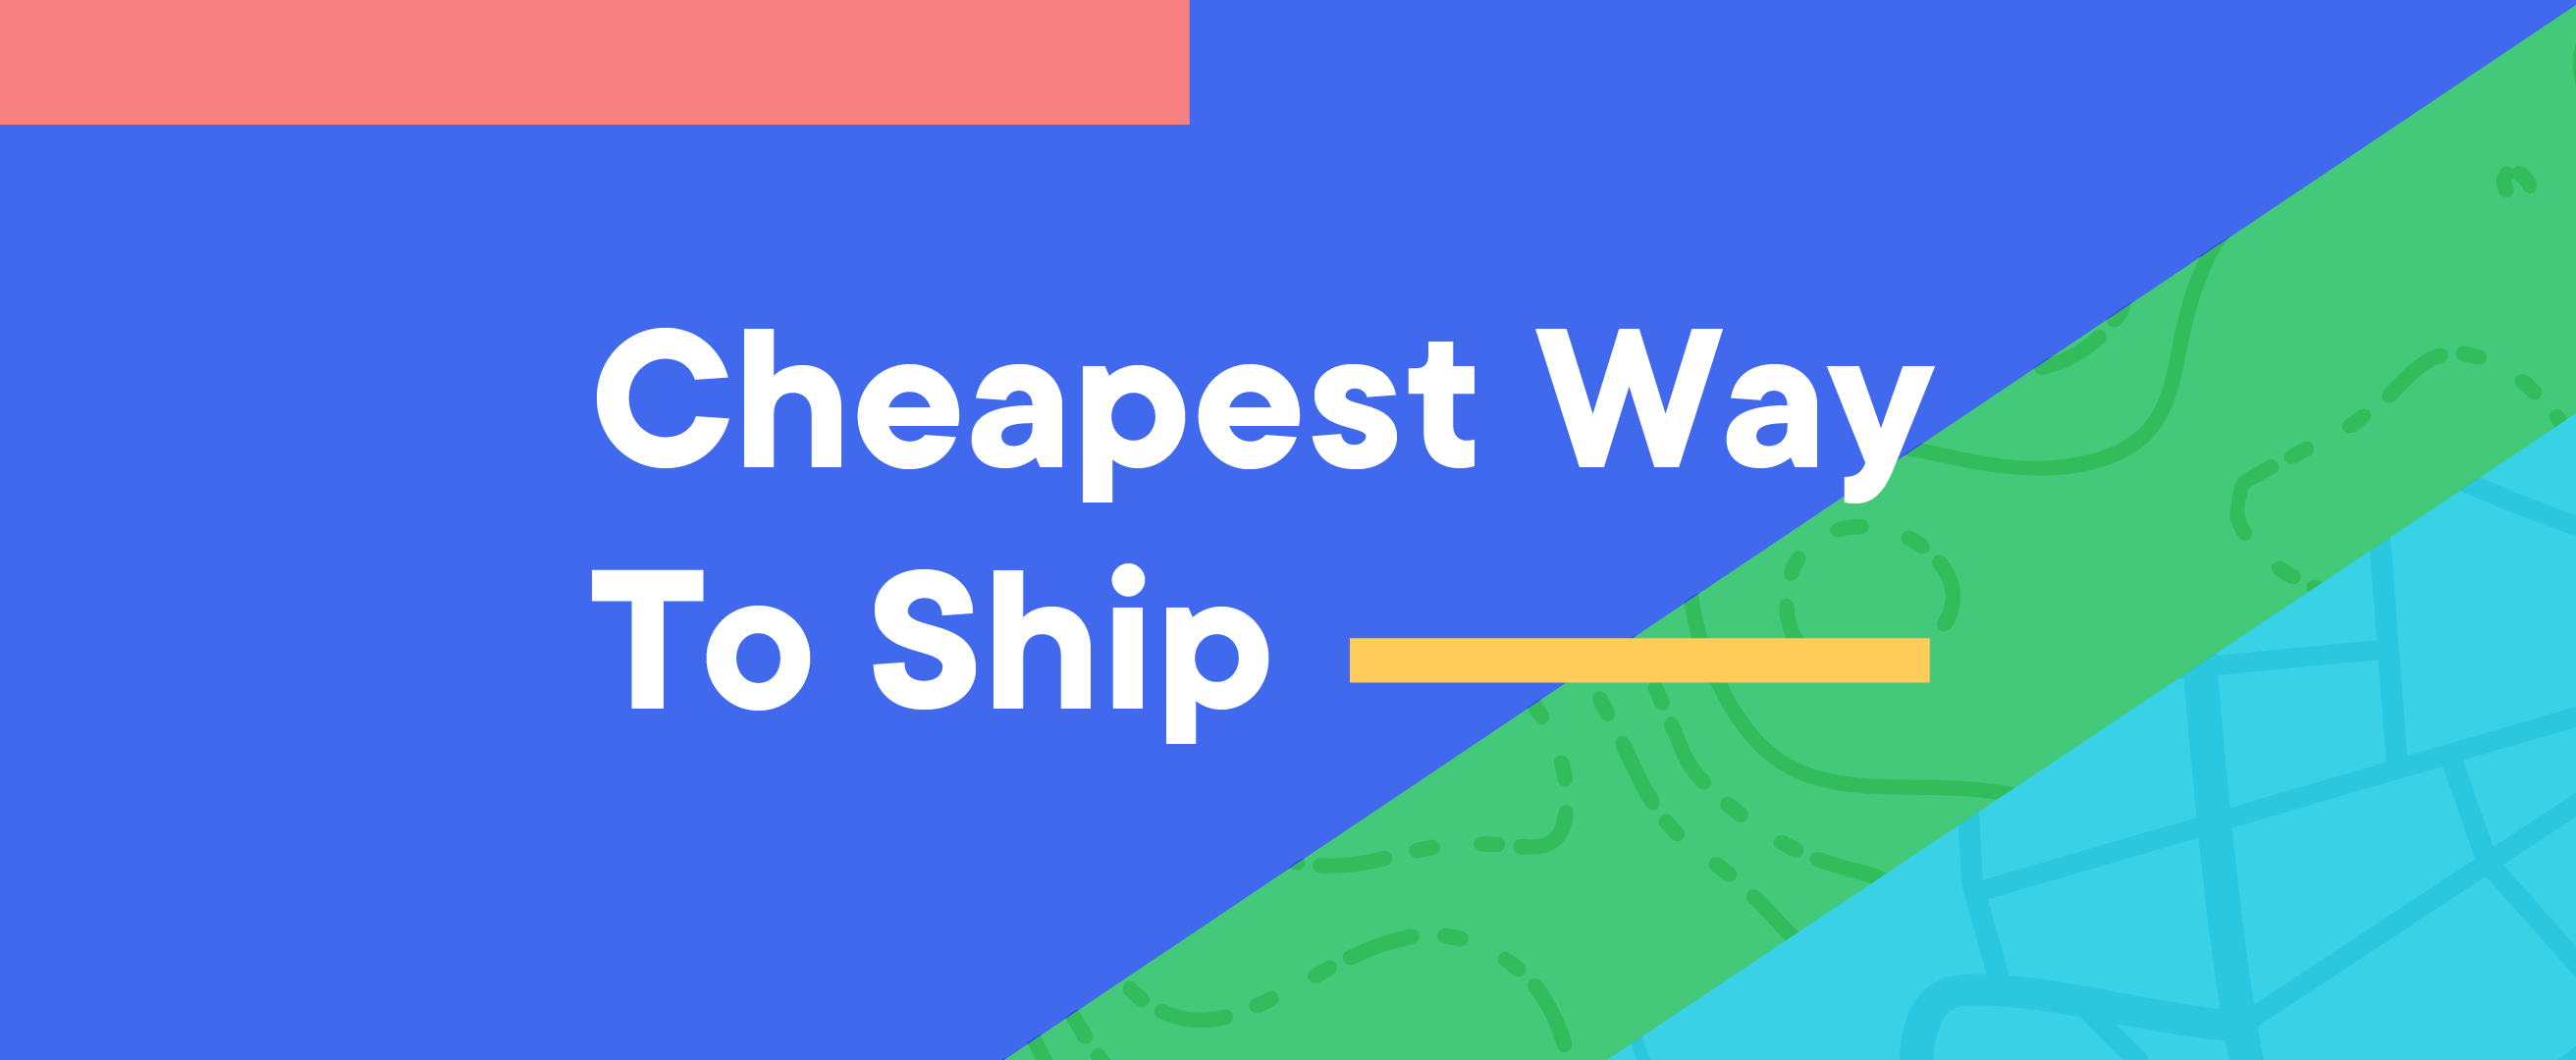 Cheap Shipping Logo